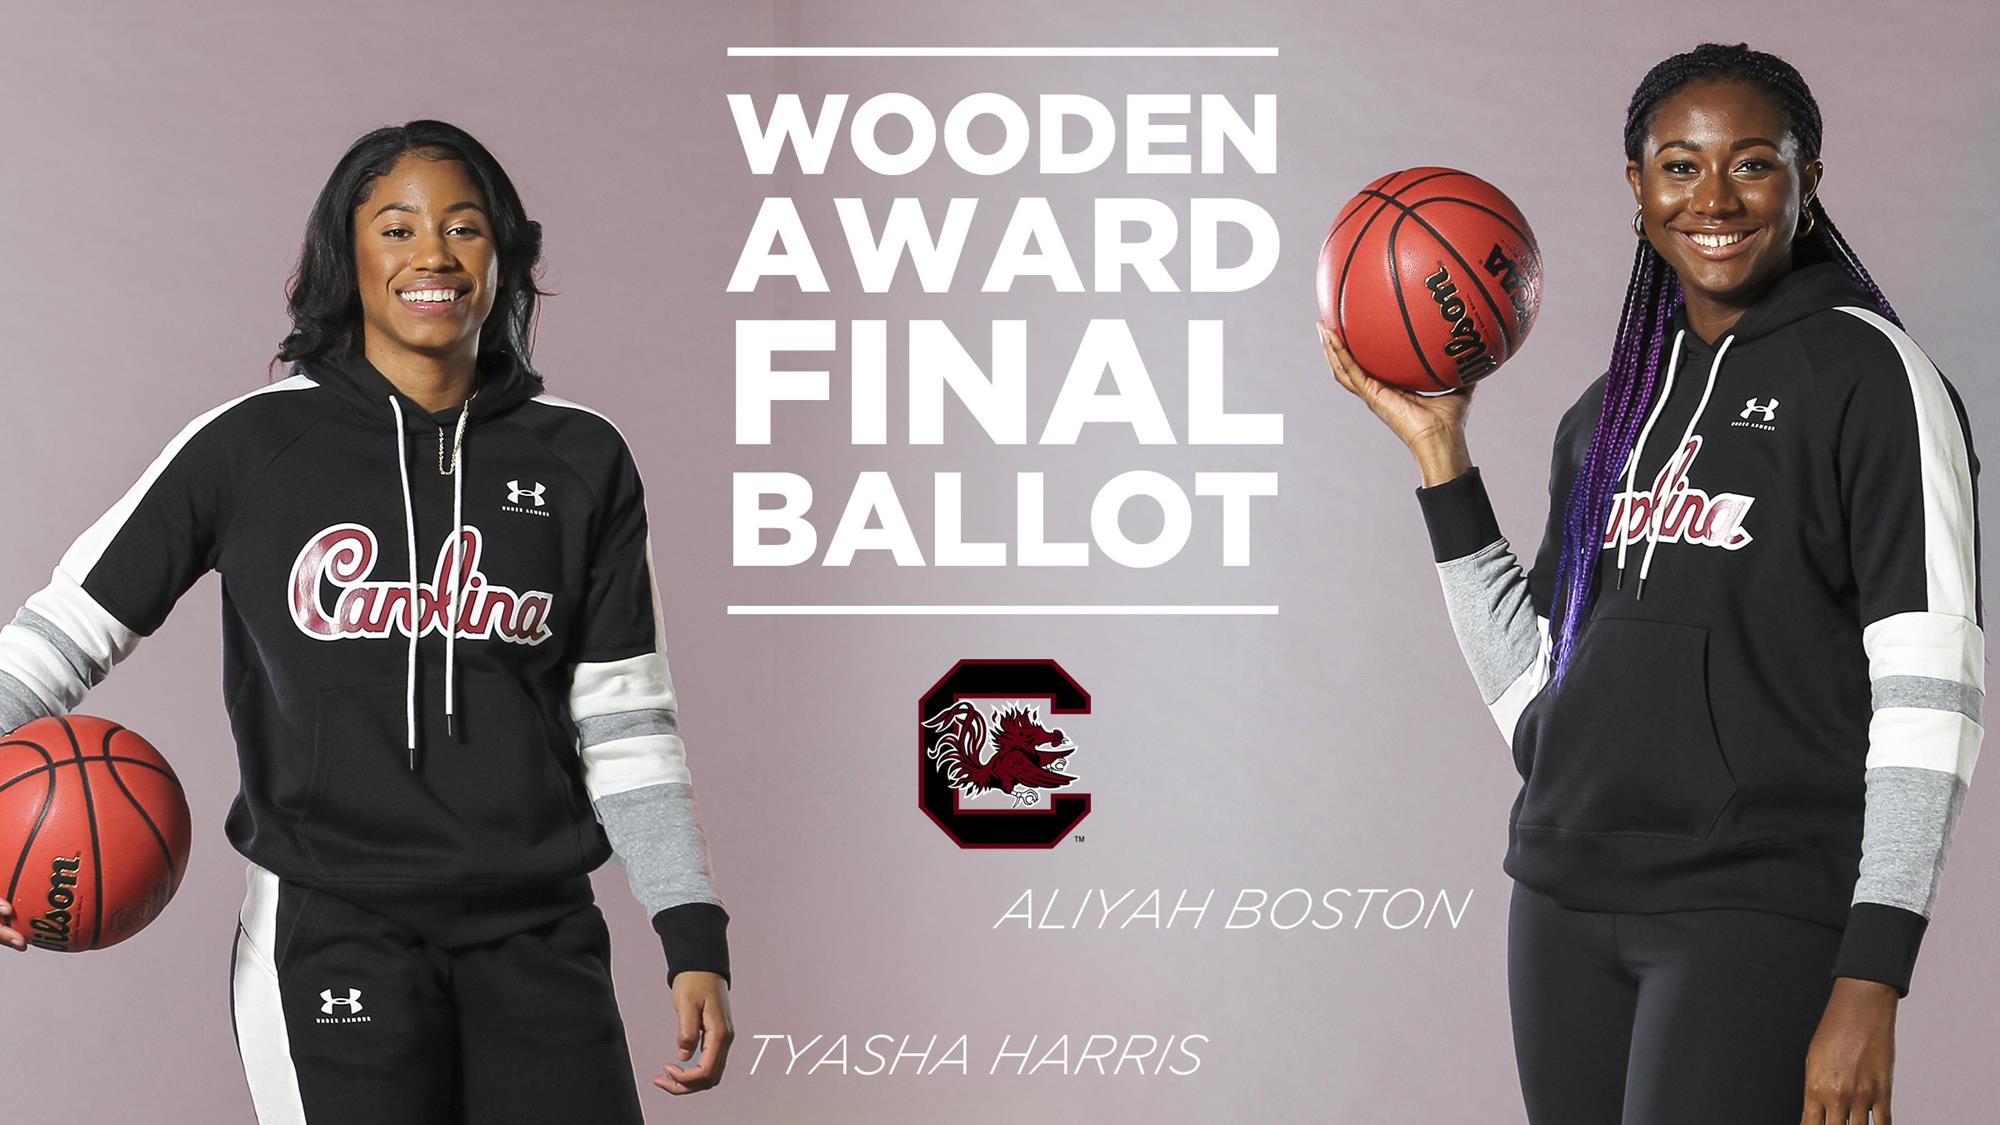 Boston, Harris On Wooden Award Final Ballot